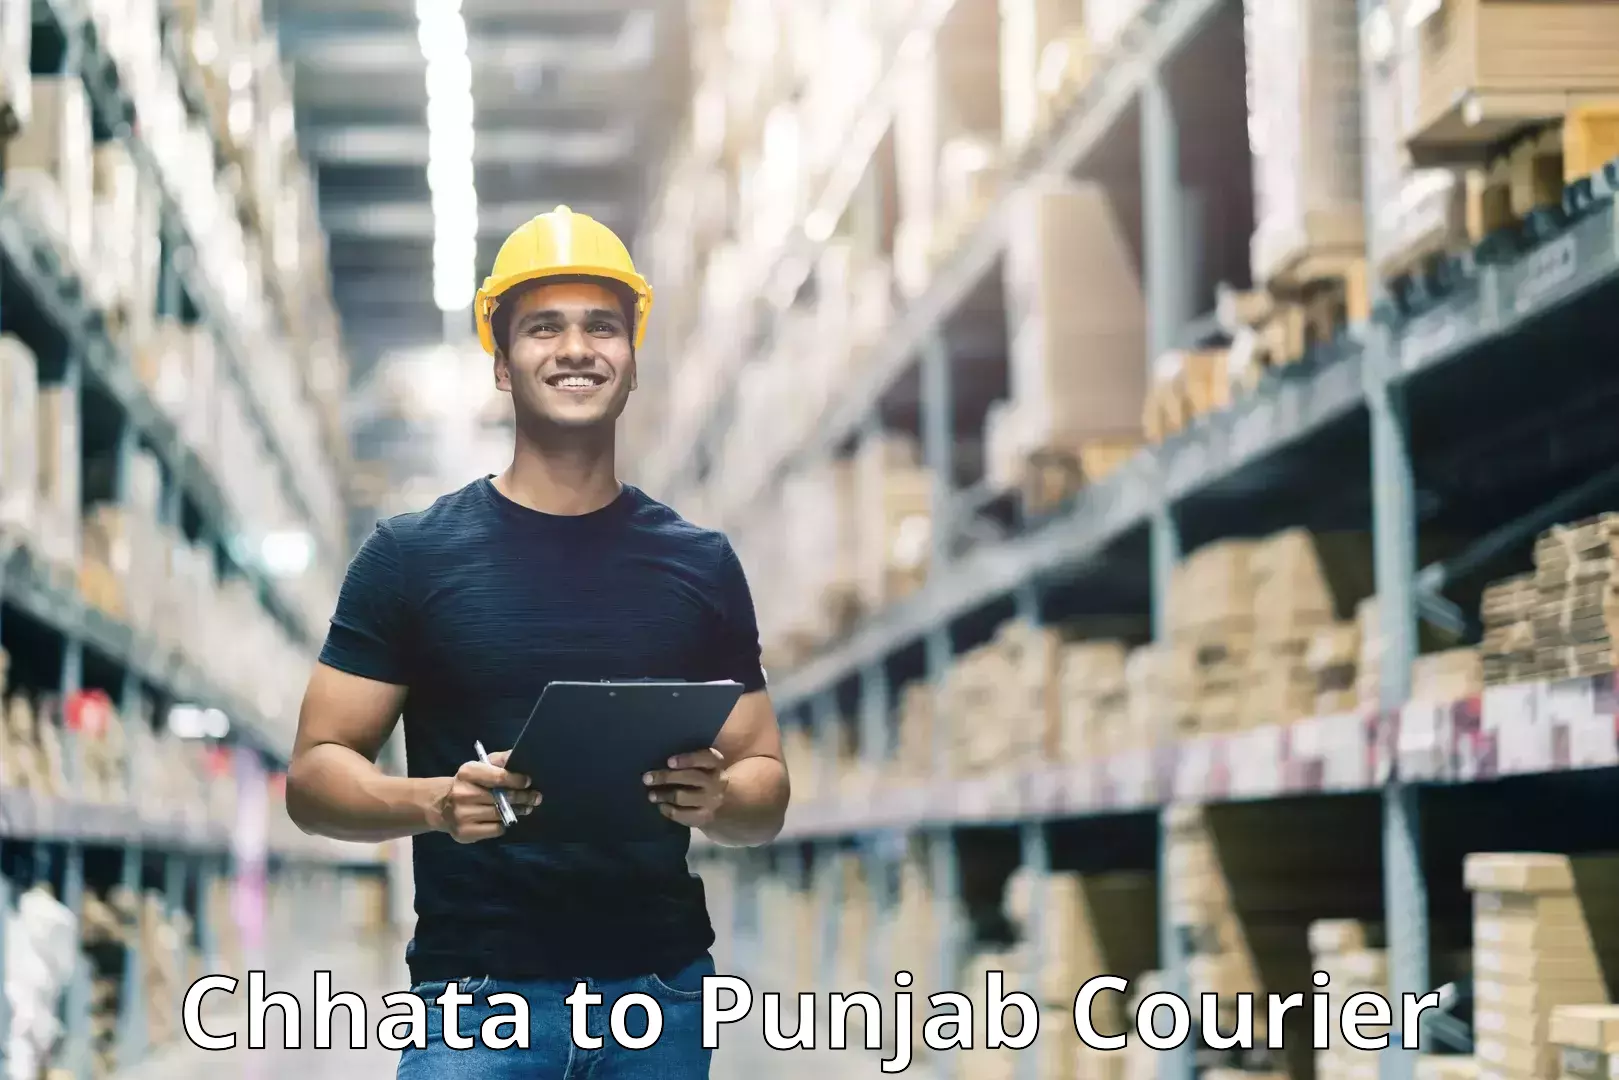 International parcel service Chhata to Punjab